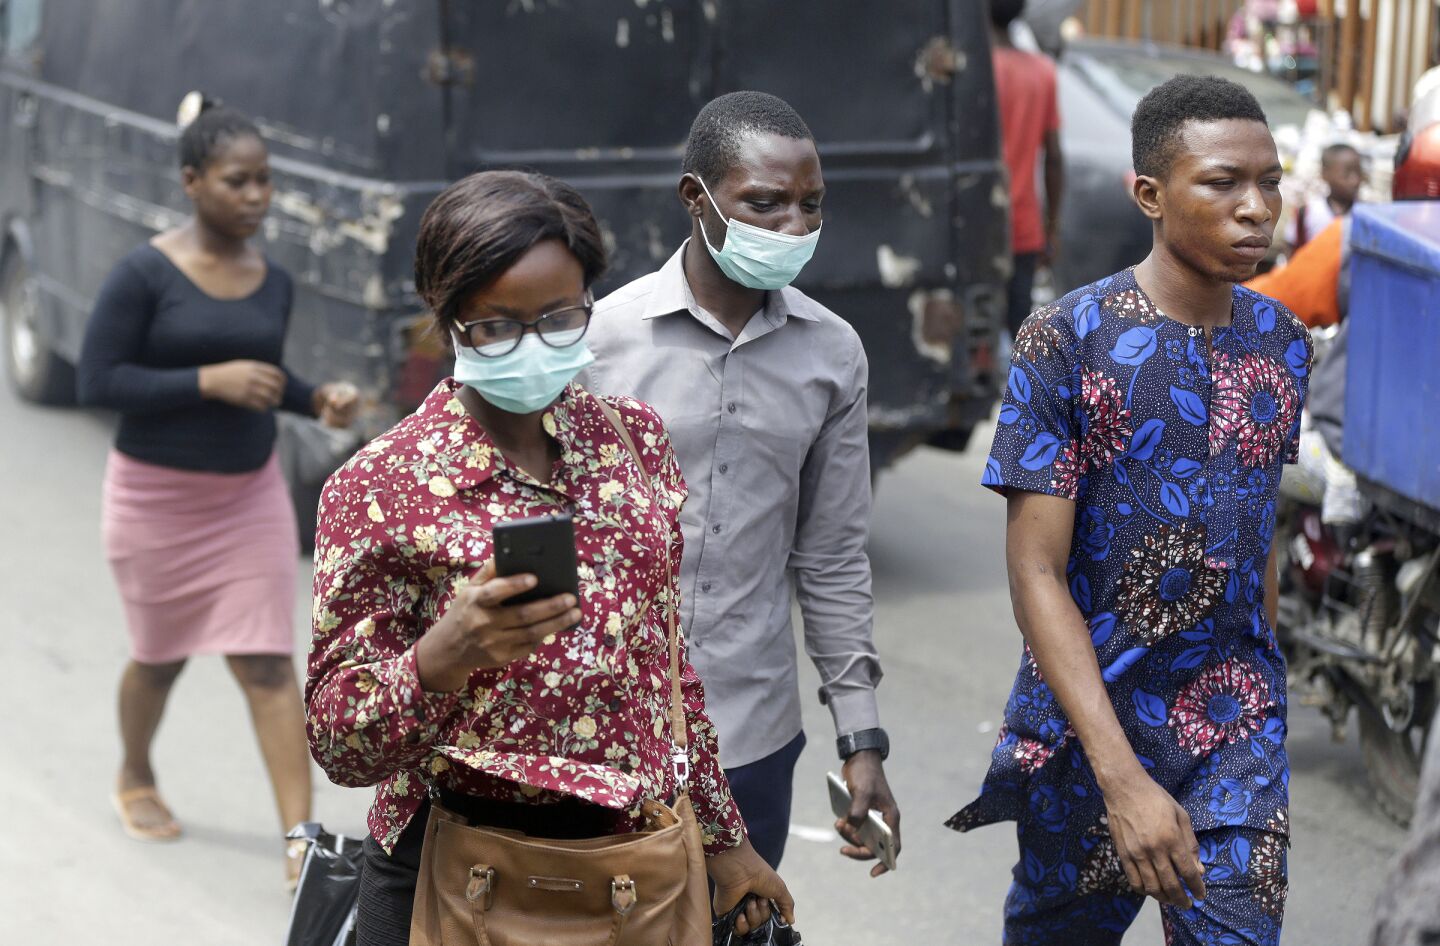 Nigeria: People wearing face masks walk through a busy market in Lagos, Nigeria.